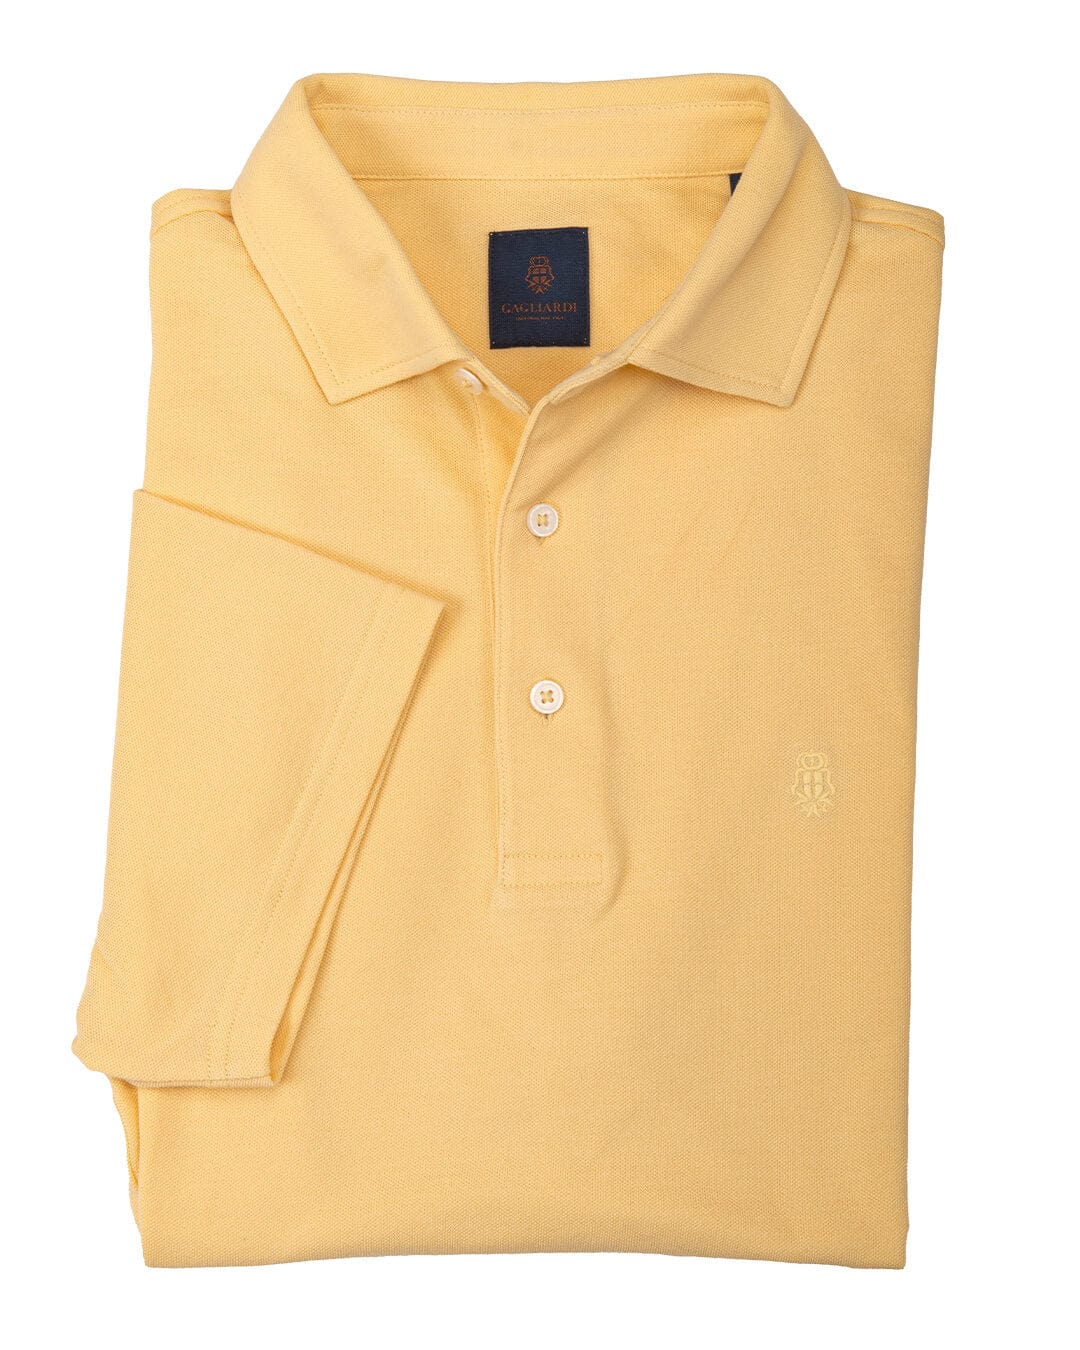 Gagliardi Lemon Pique Polo Shirt - Bortex Fine Tailoring